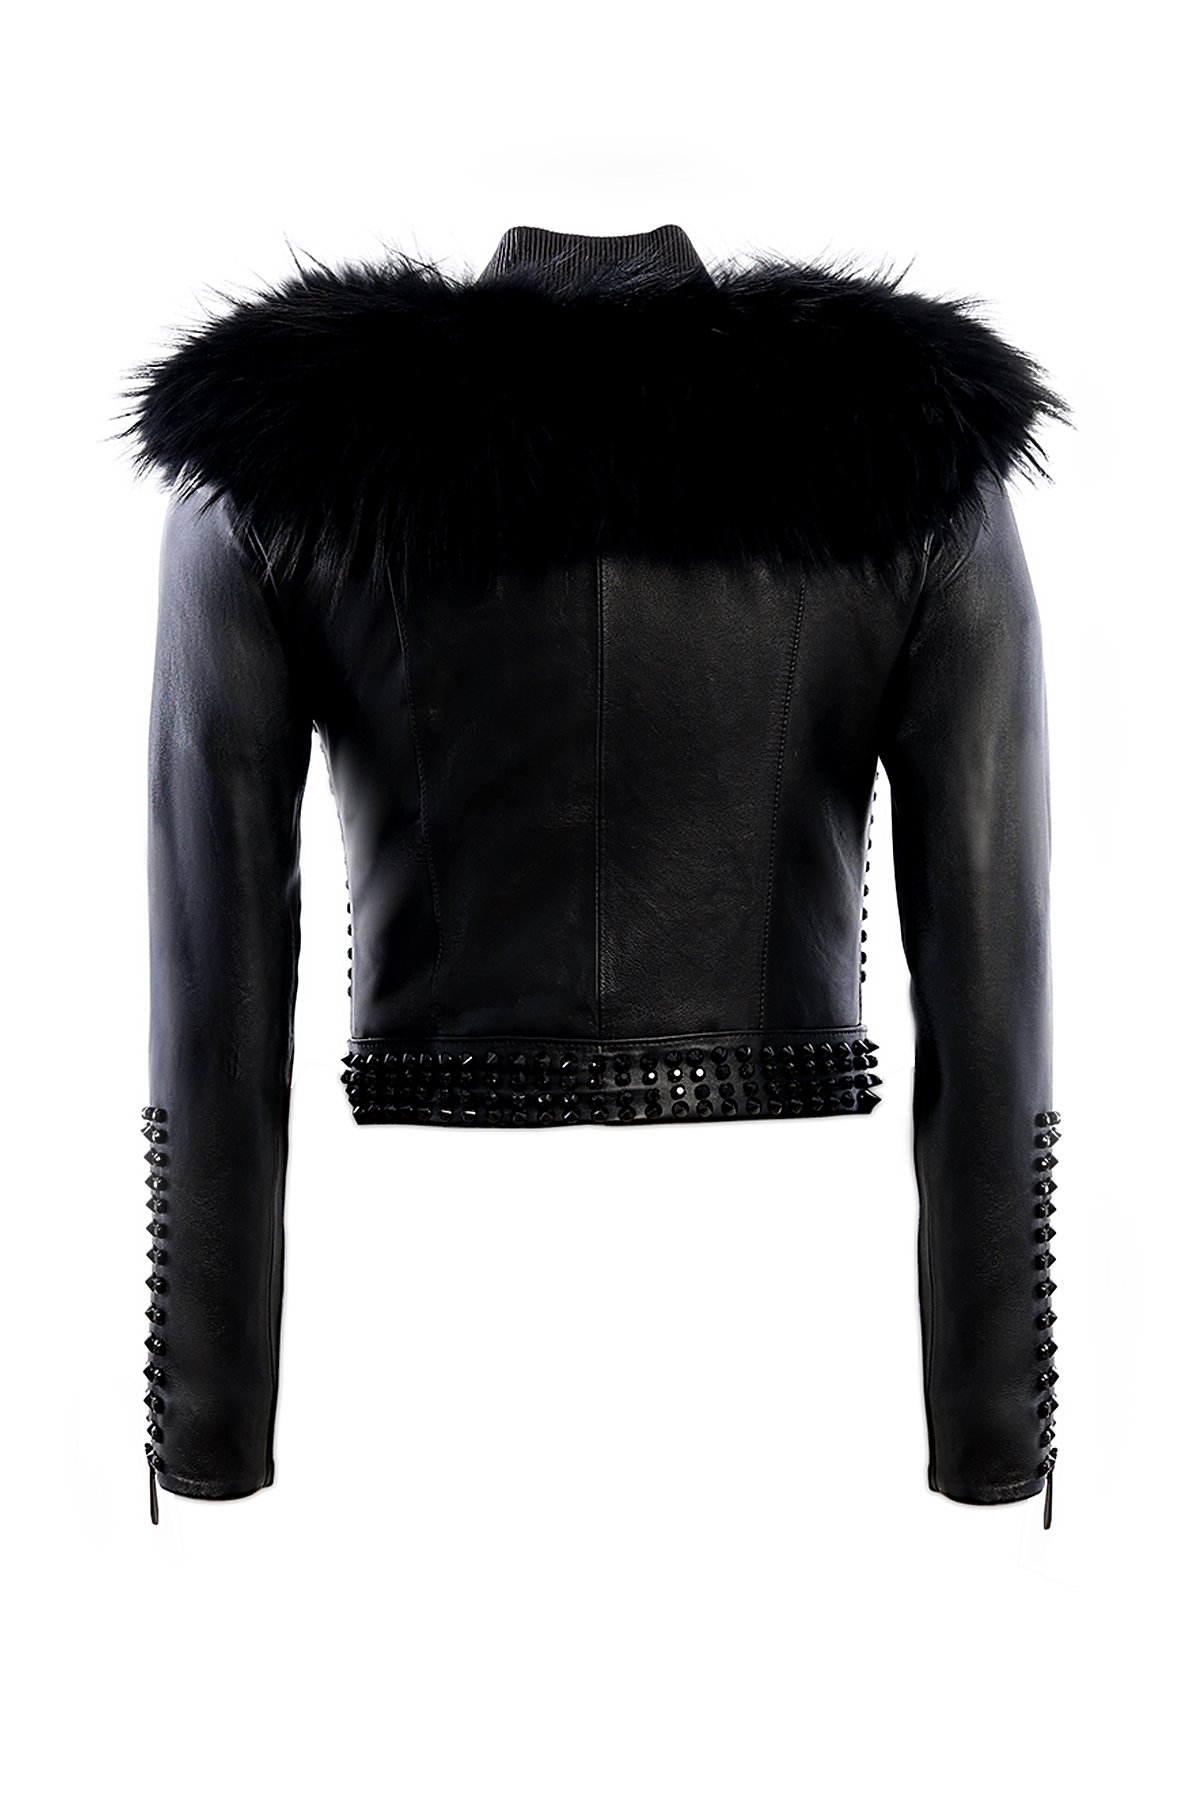 Black Leather With Fur Collar - Vavskins